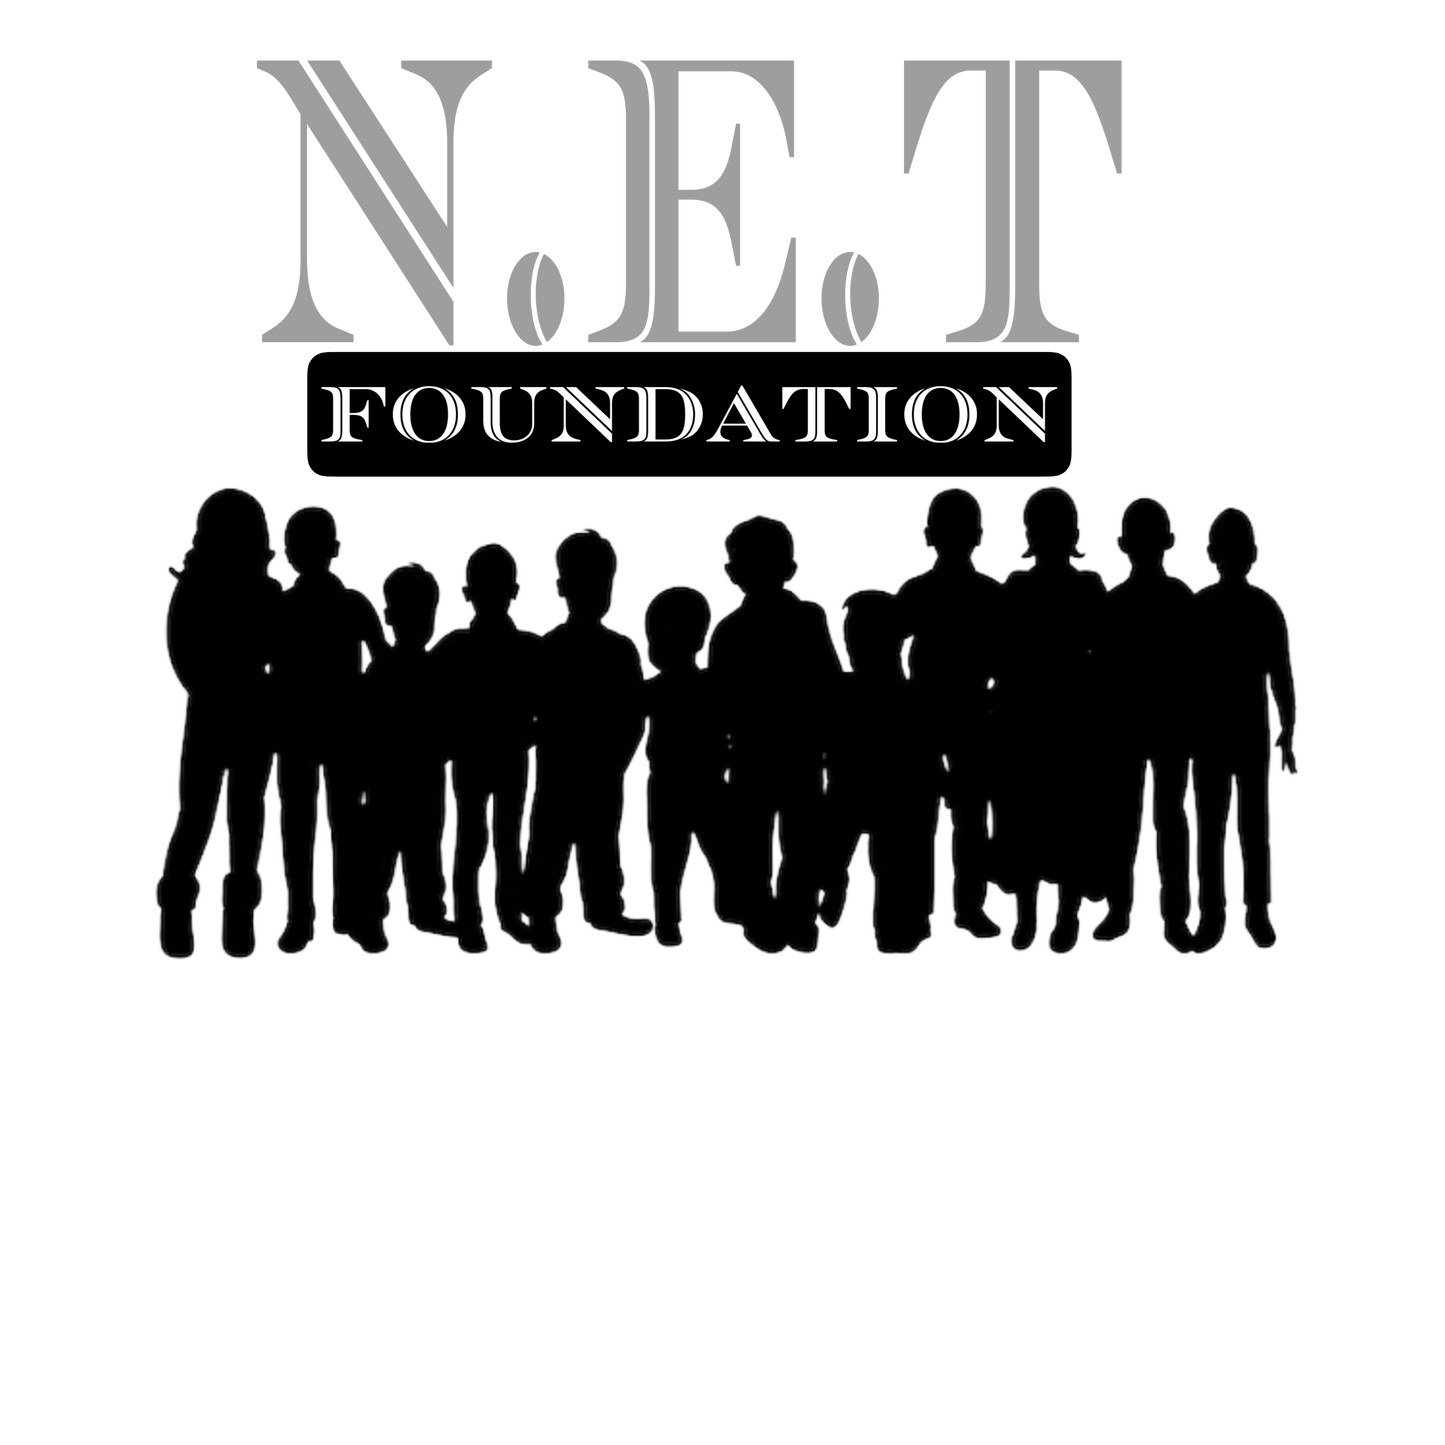 NET Foundation Donation